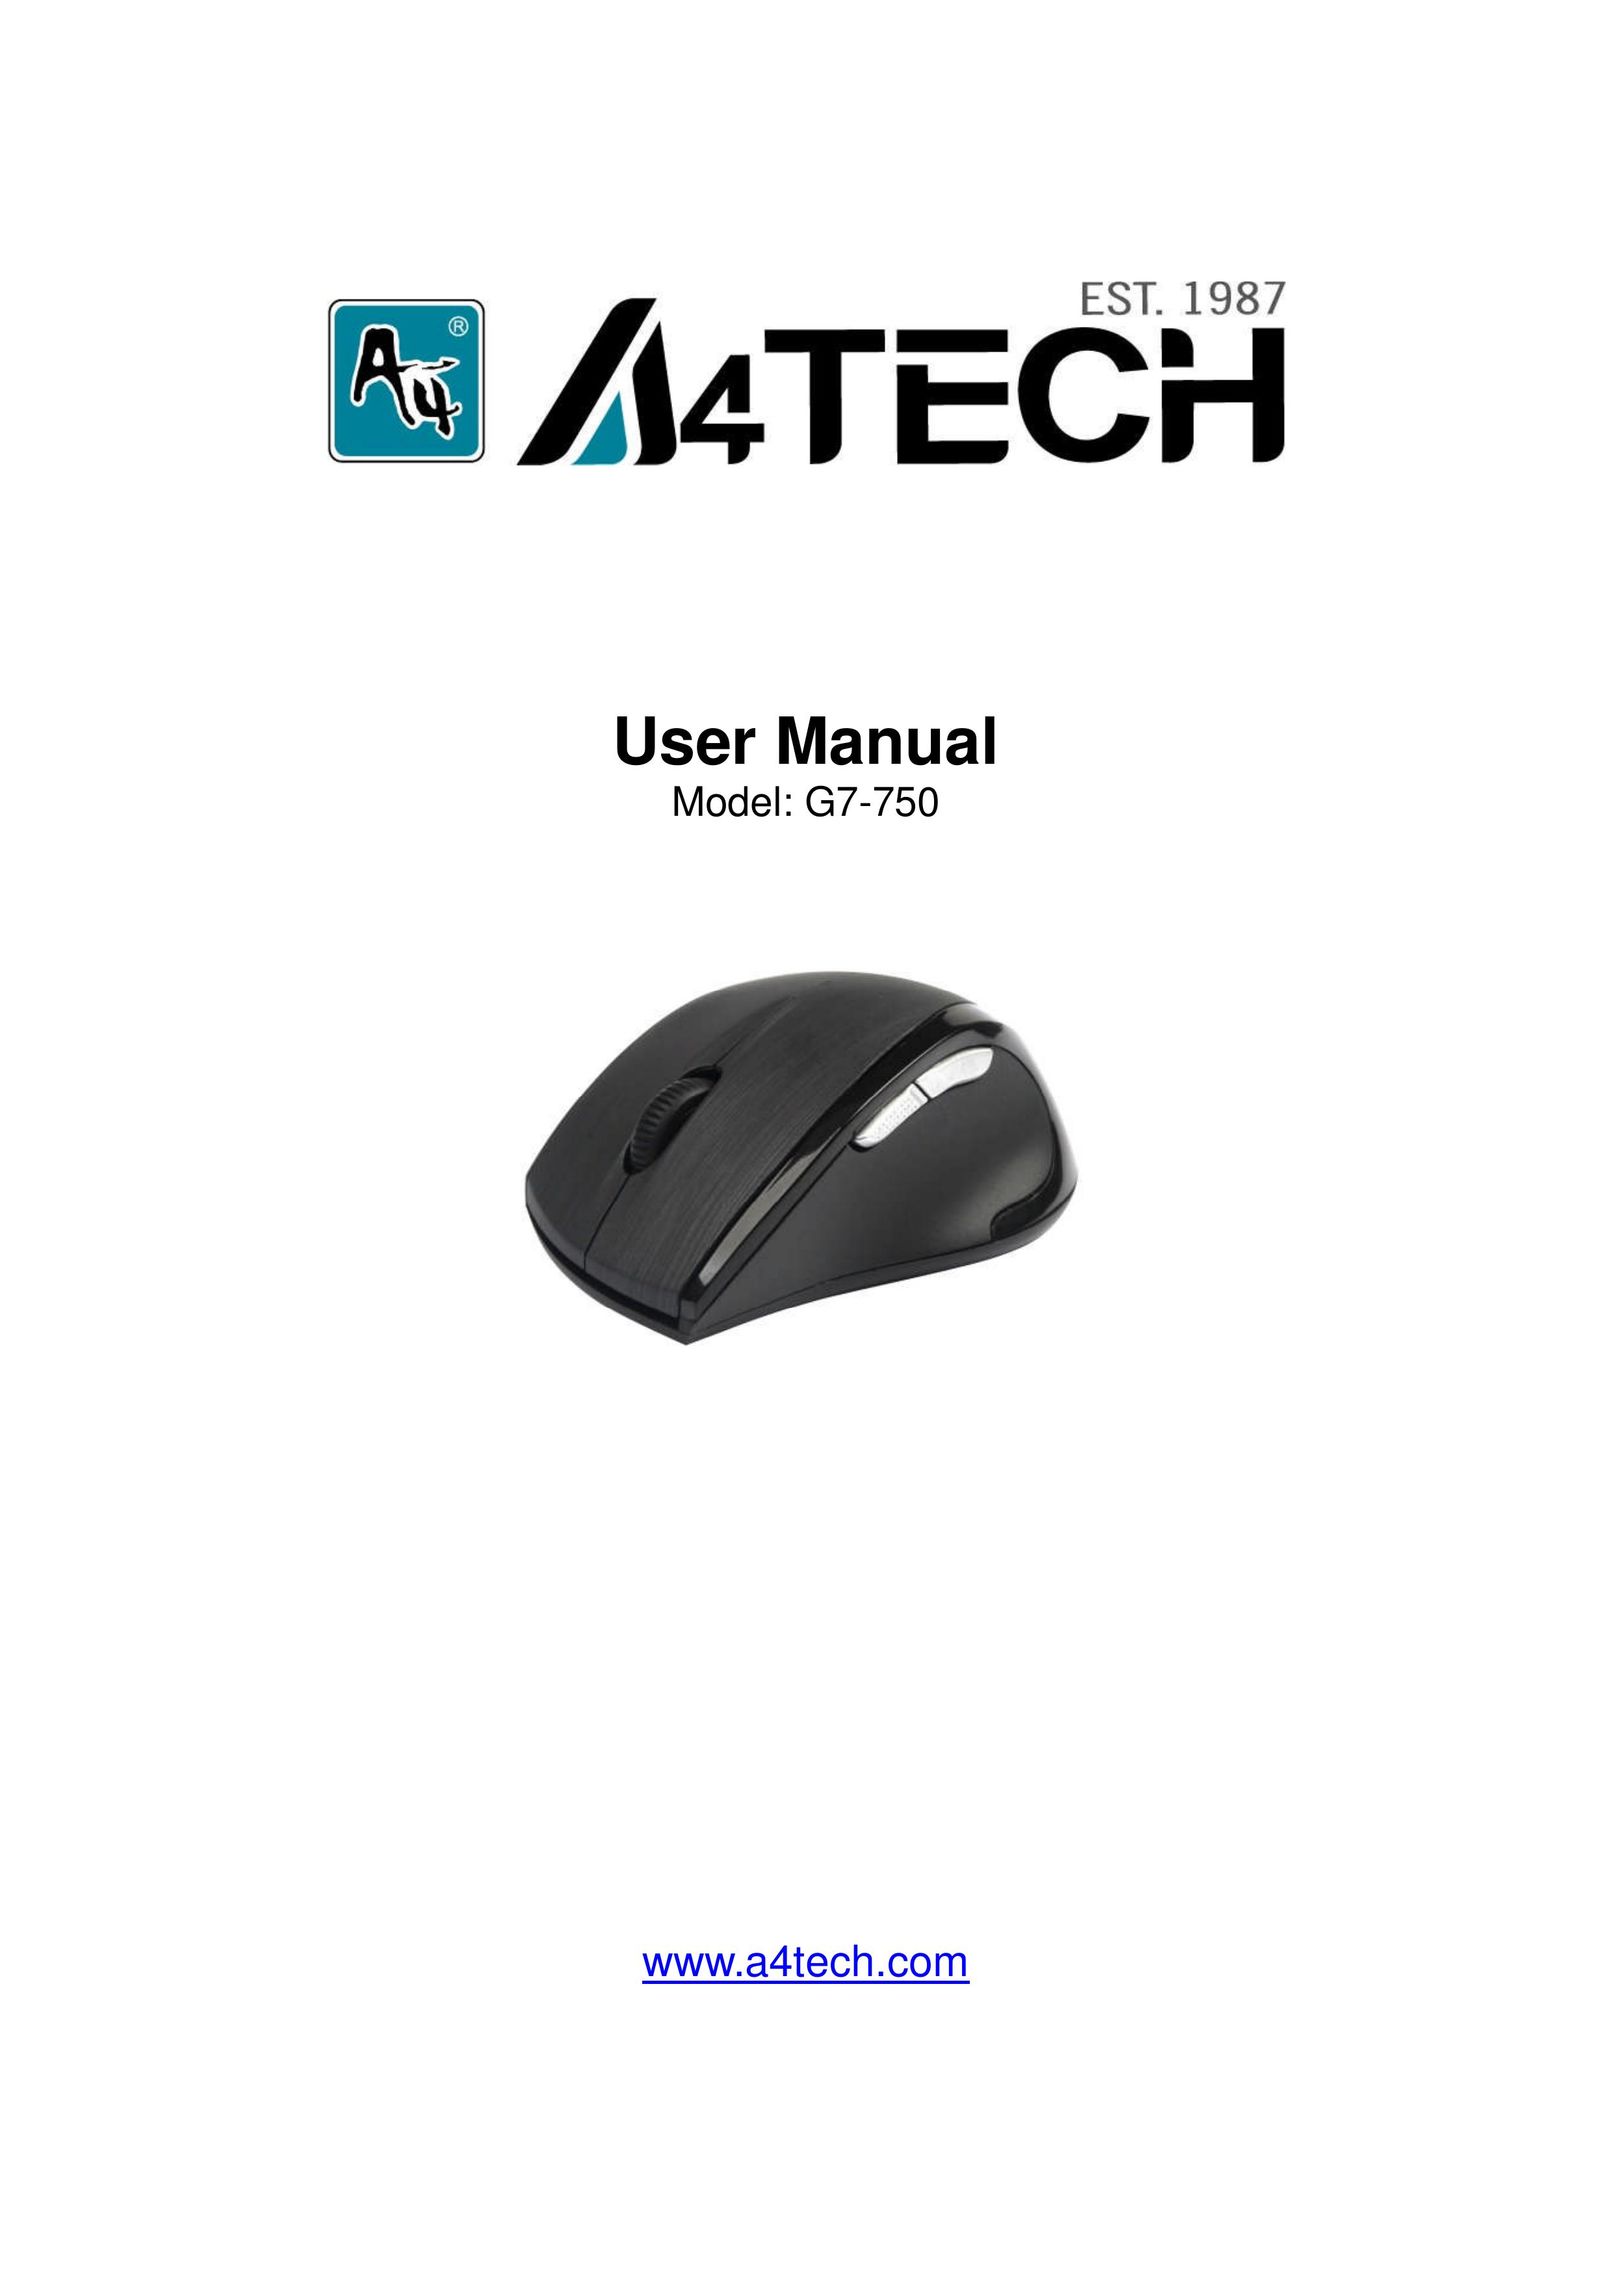 A4 Tech. G7-750 Mouse User Manual